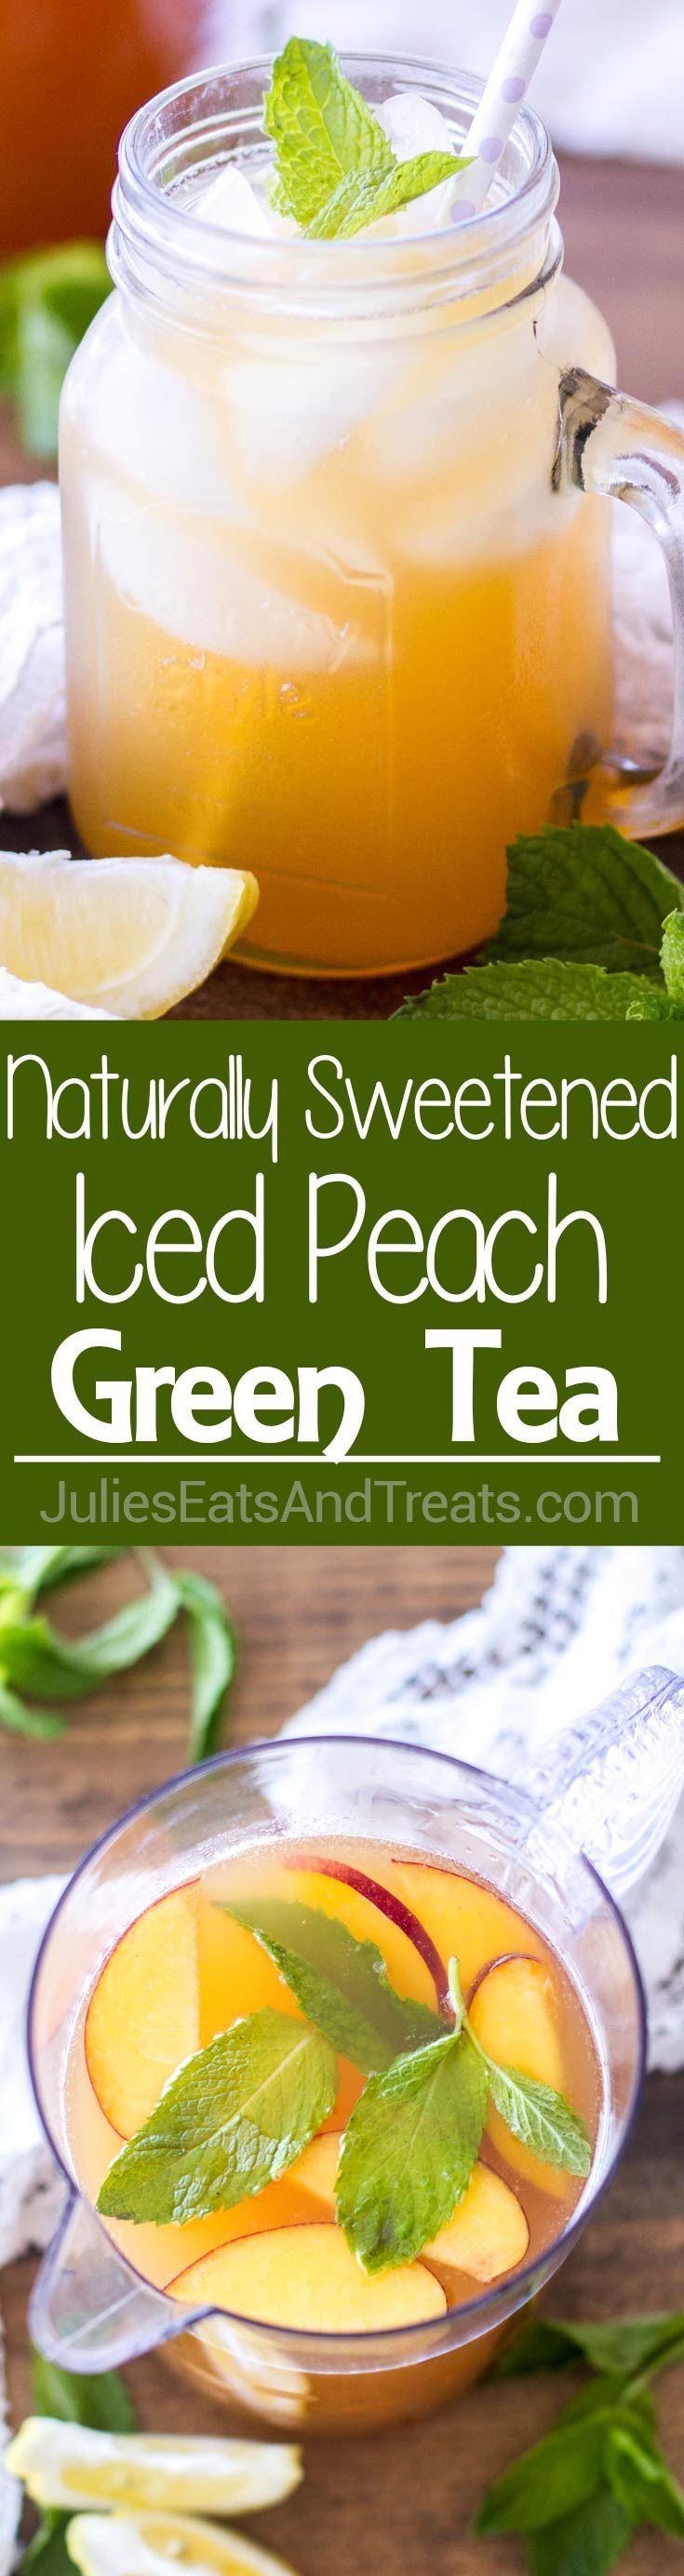 Wedding - Naturally Sweetened Iced Peach Green Tea